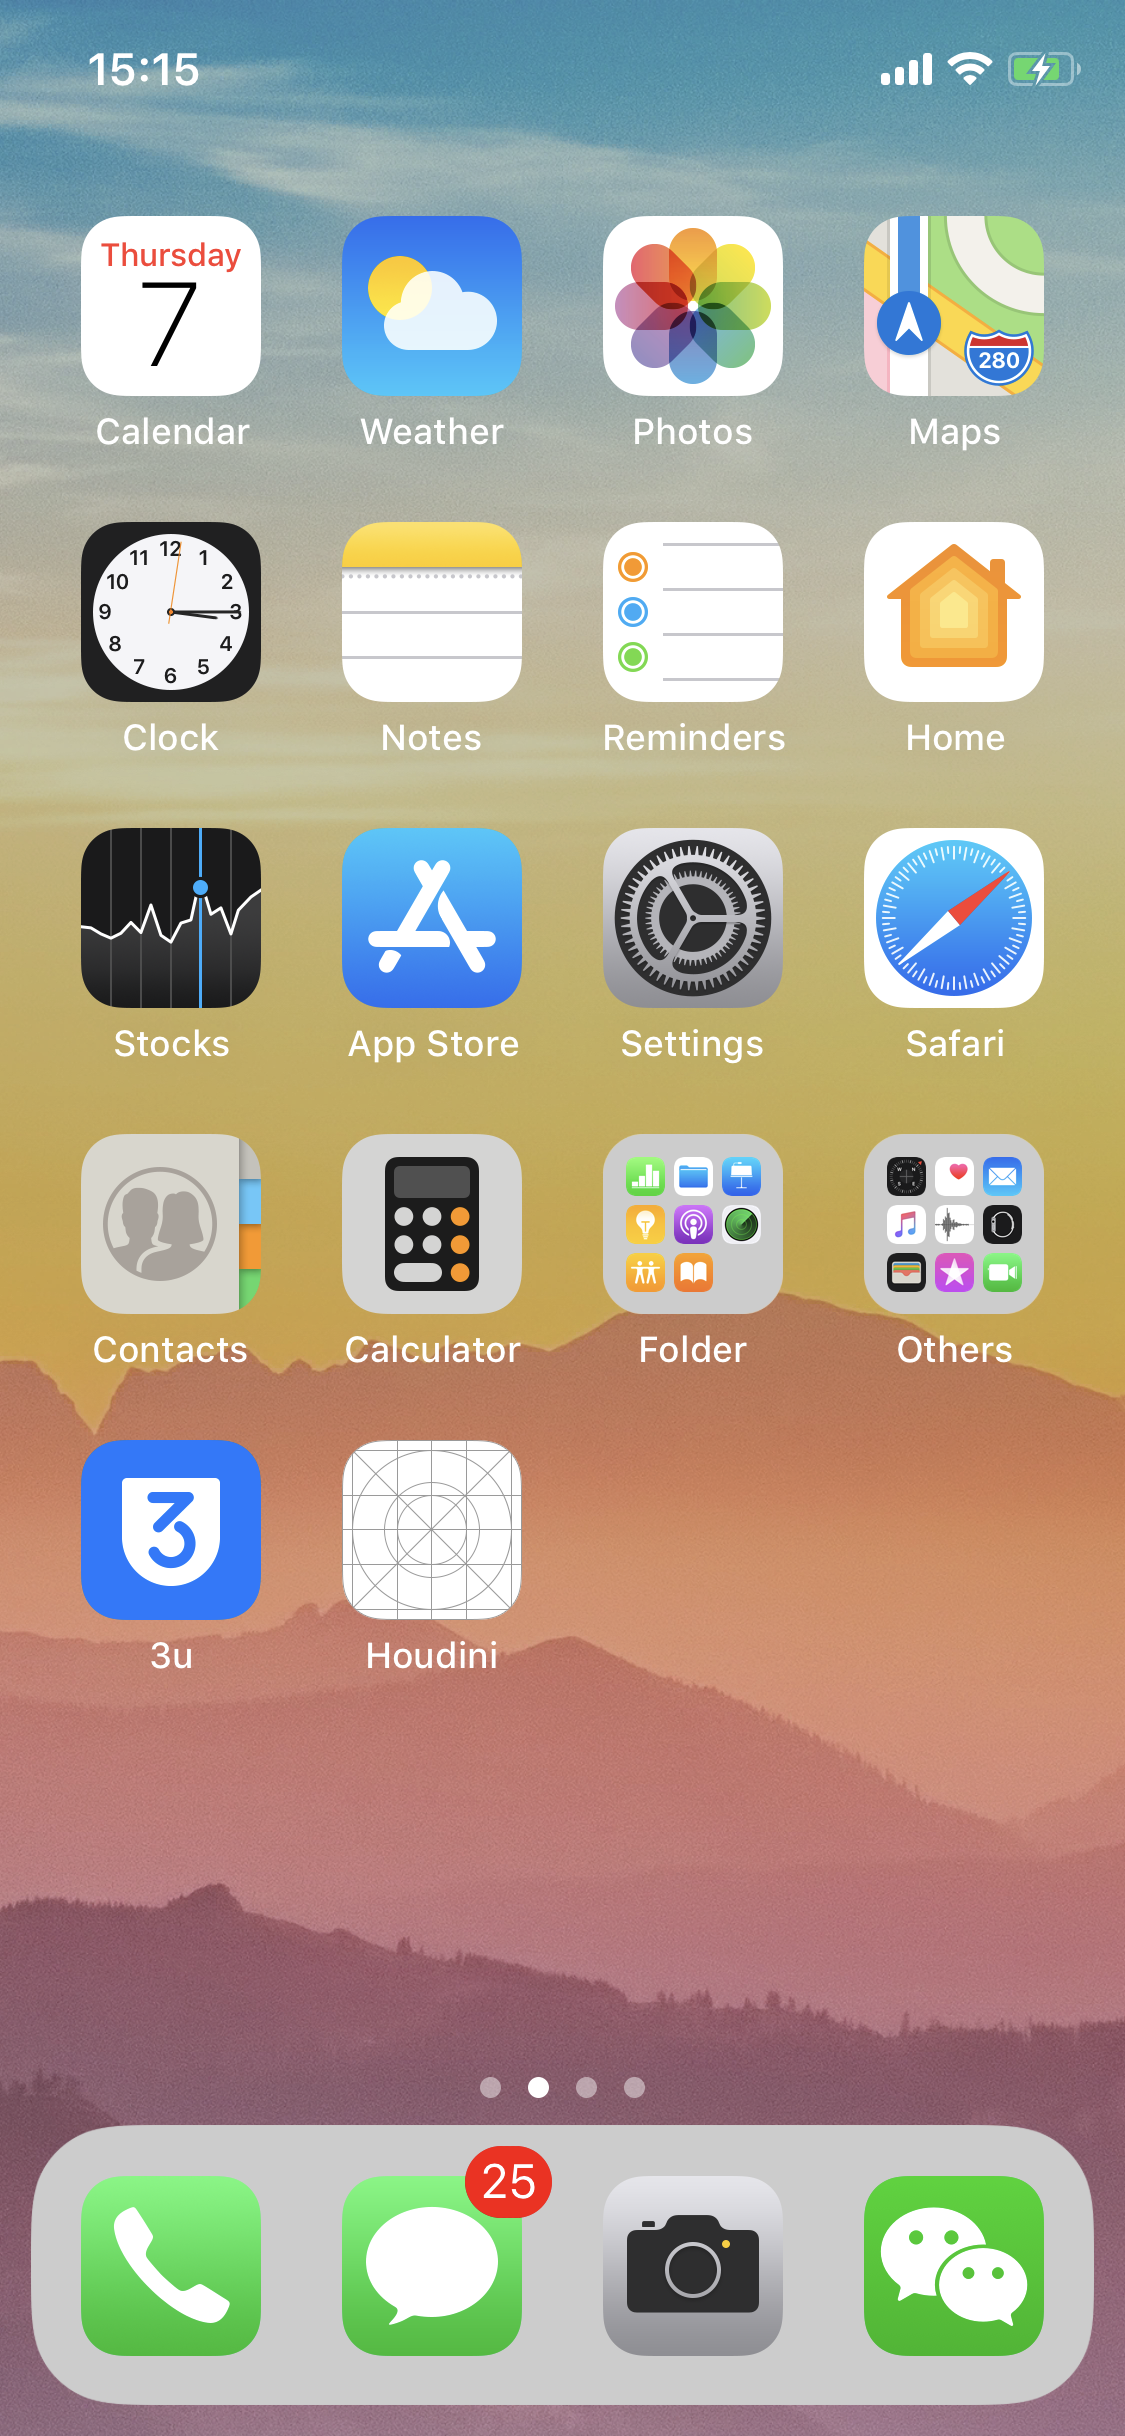 Houdini iOS 11.3.1 Semi-Jailbreak Released